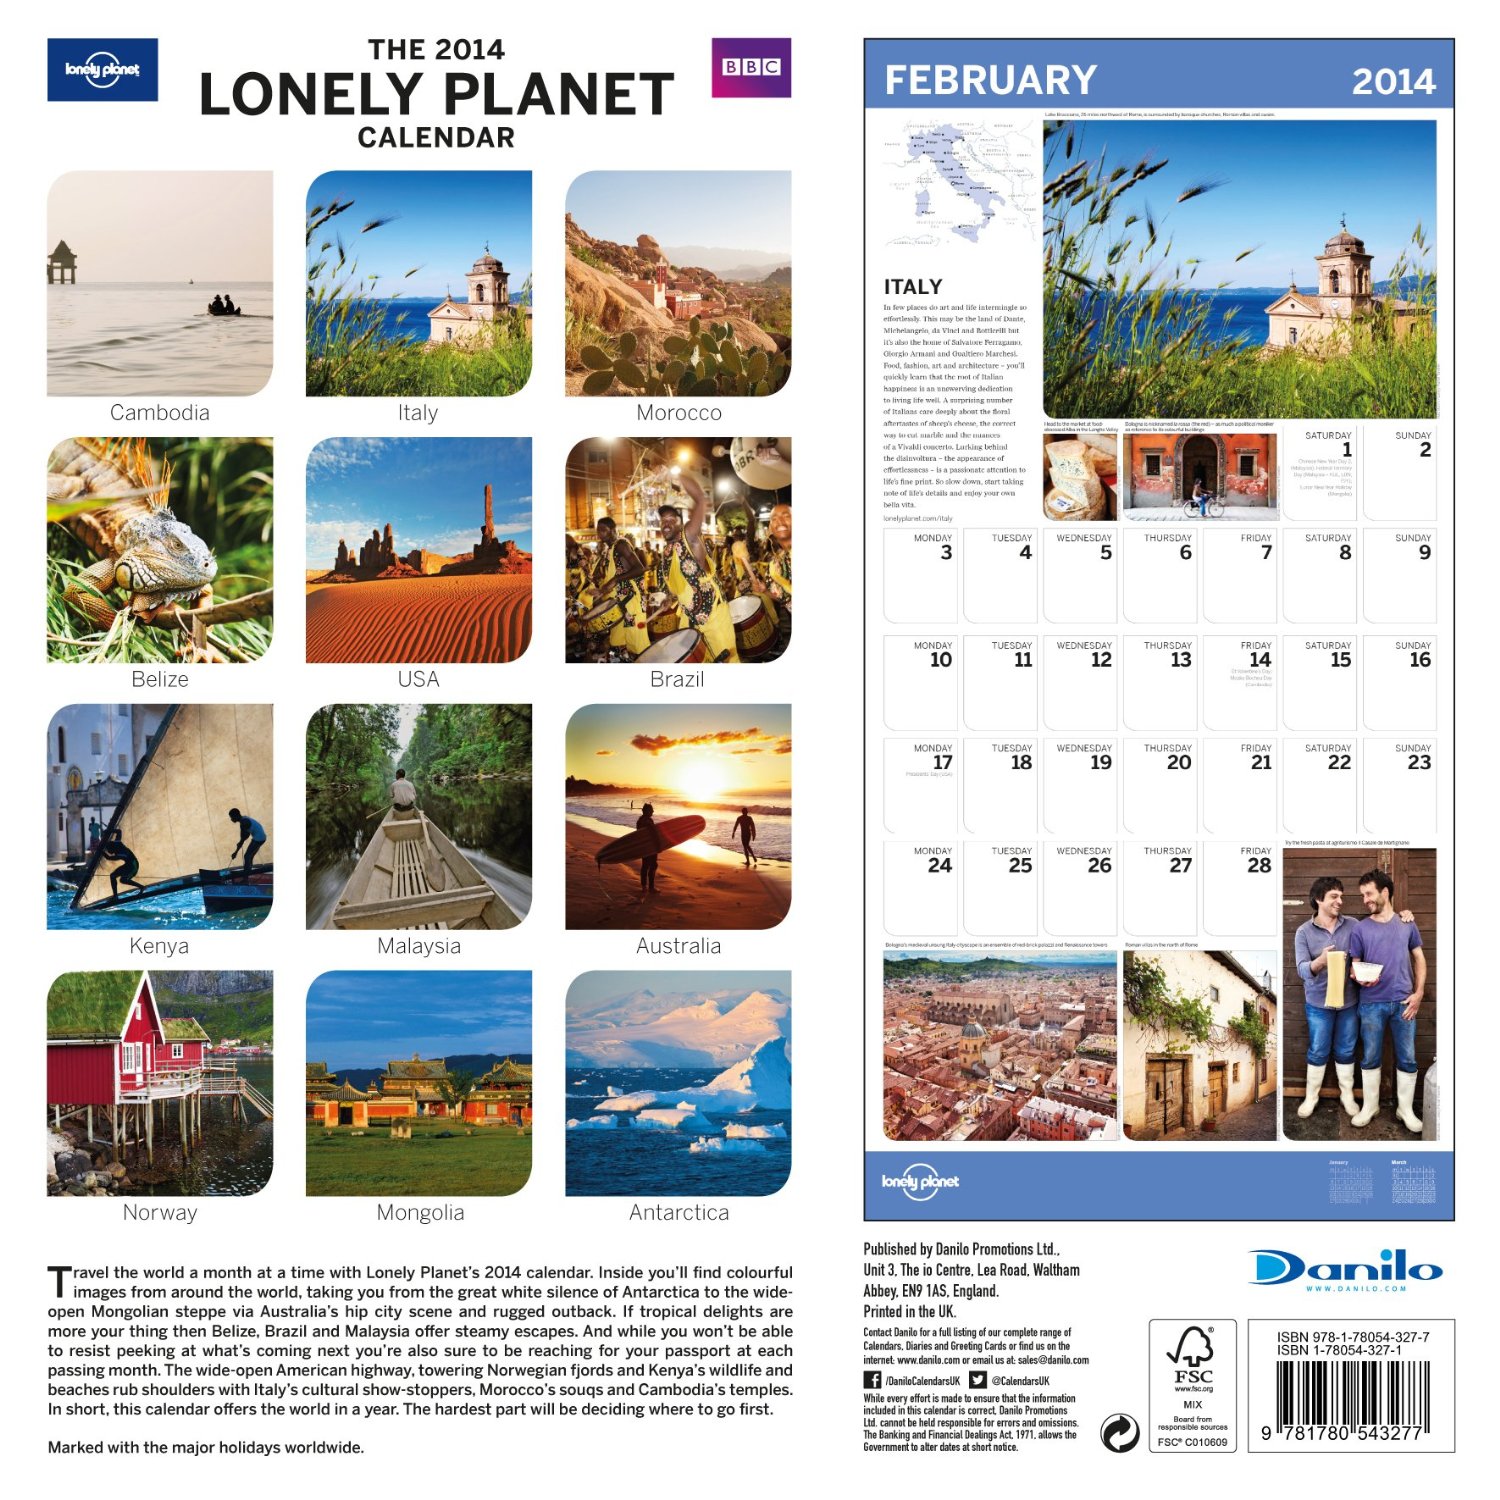 kalender-the-lonely-planet-calendar-2014-lonely-planet-9781780543277-reisboekwinkel-de-zwerver